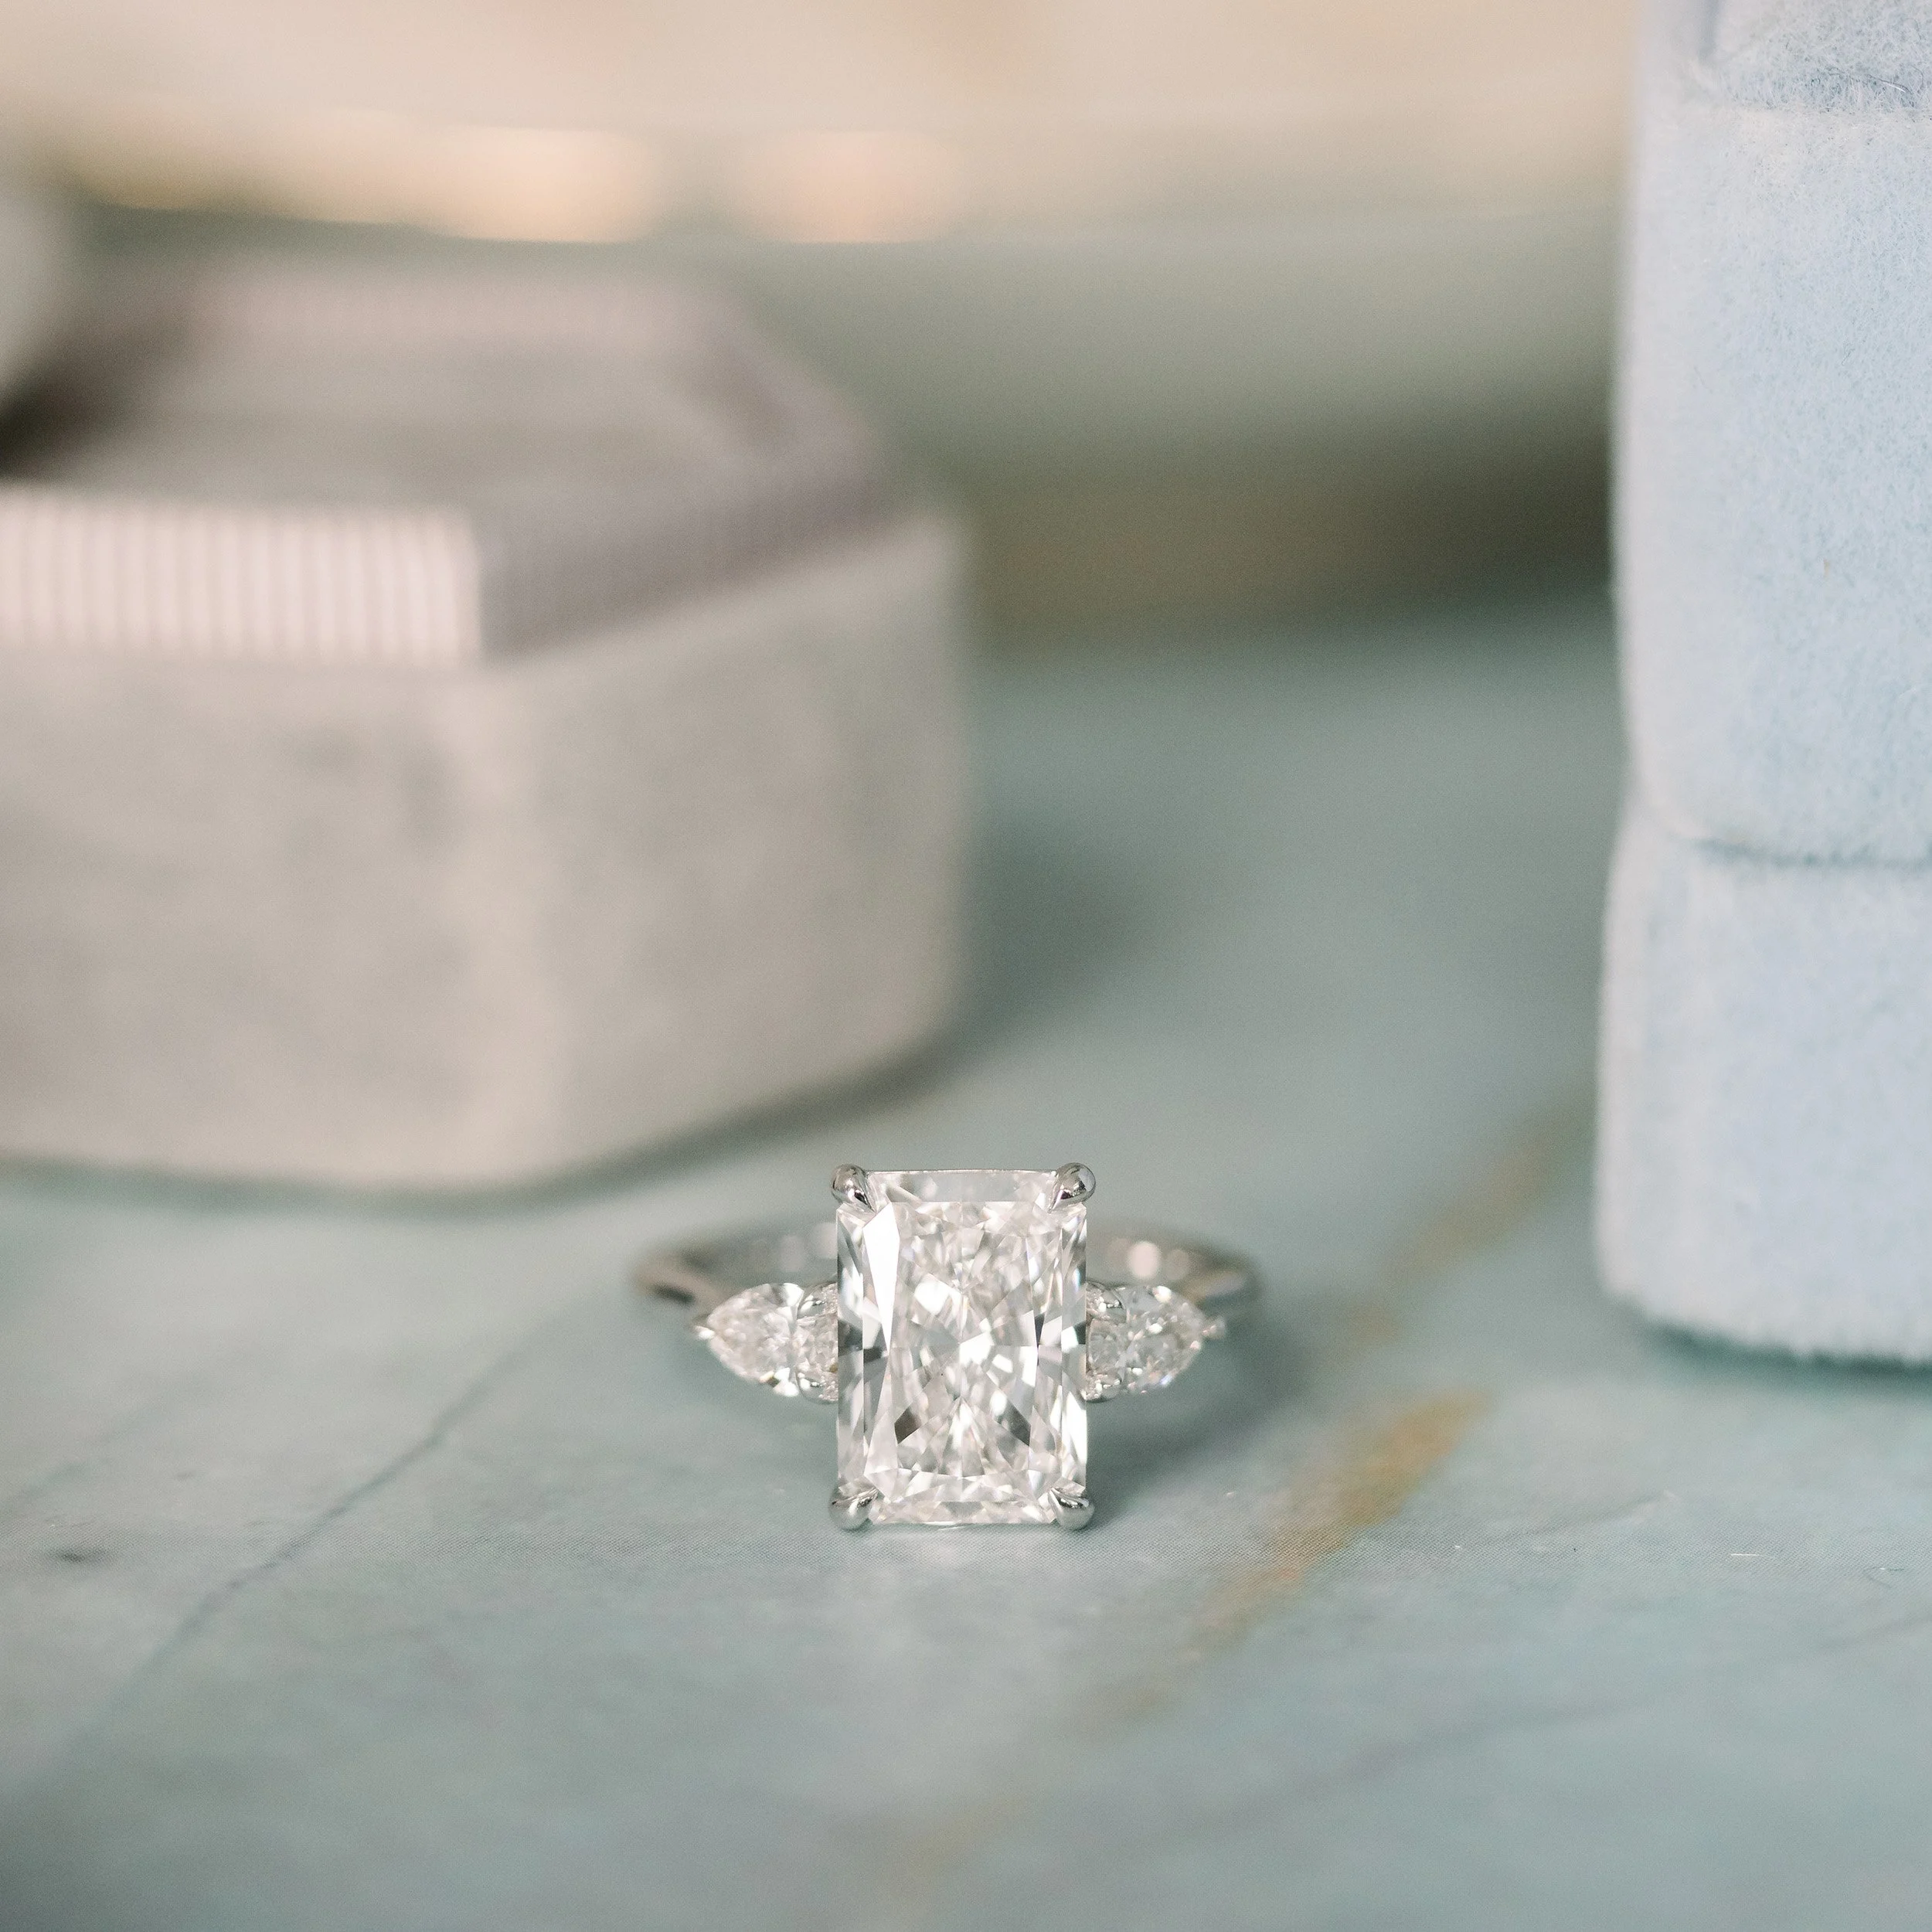 18k 2.5 ct white gold radiant cut and pear three stone man made diamond engagement ring ada diamonds design ad 486 macro